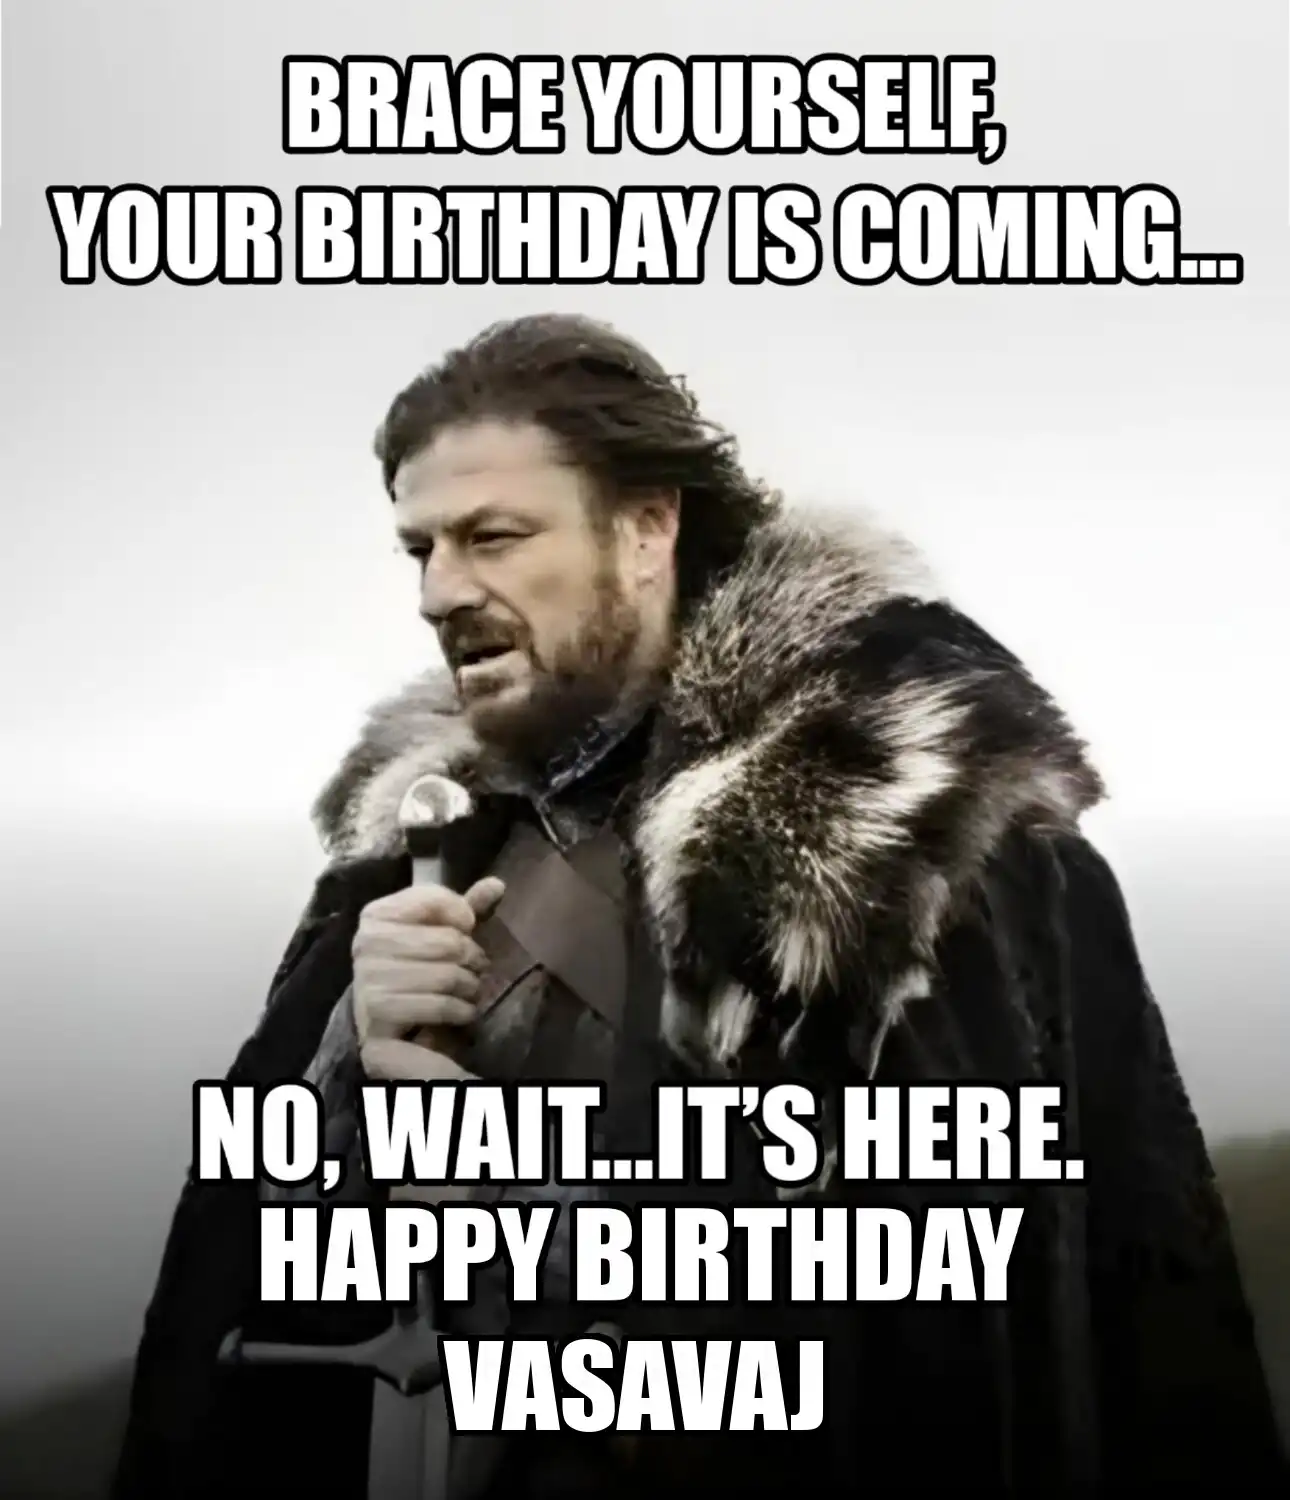 Happy Birthday Vasavaj Brace Yourself Your Birthday Is Coming Meme